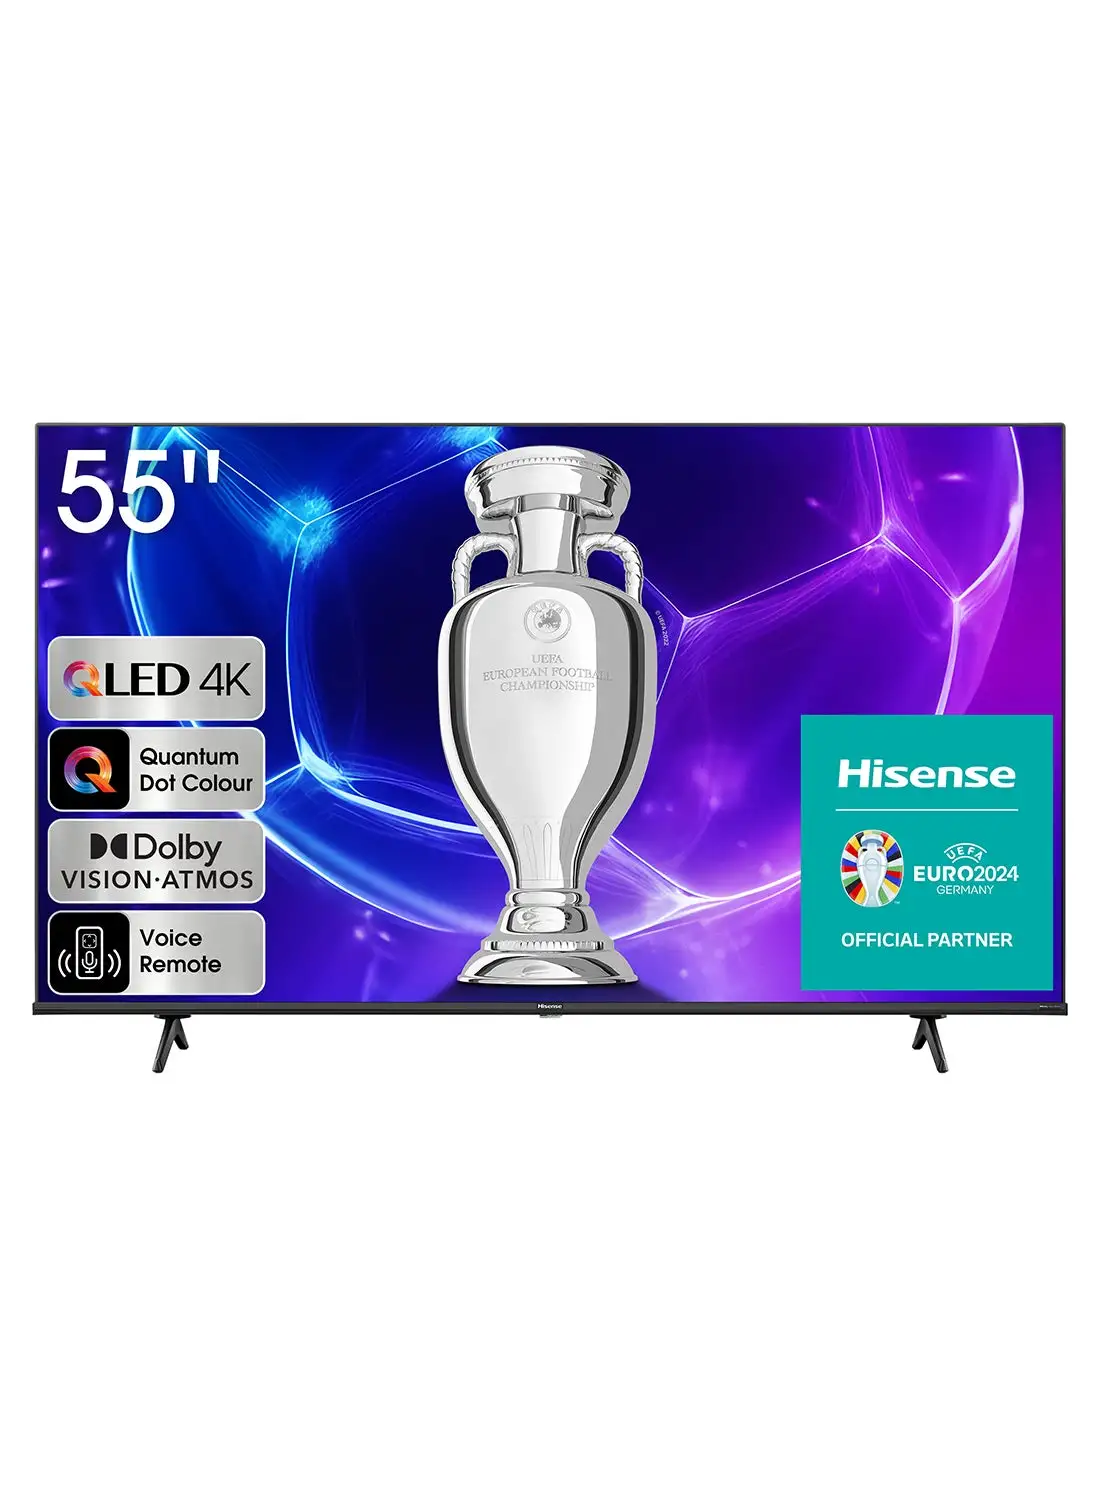 Hisense QLED U6 4K Smart TV 55 Inch E7K Series With Quantum Dot Colour, VIDAA Voice, Dolby Vision, Bluetooth And WiFi 2023 New Model 55E7K Black